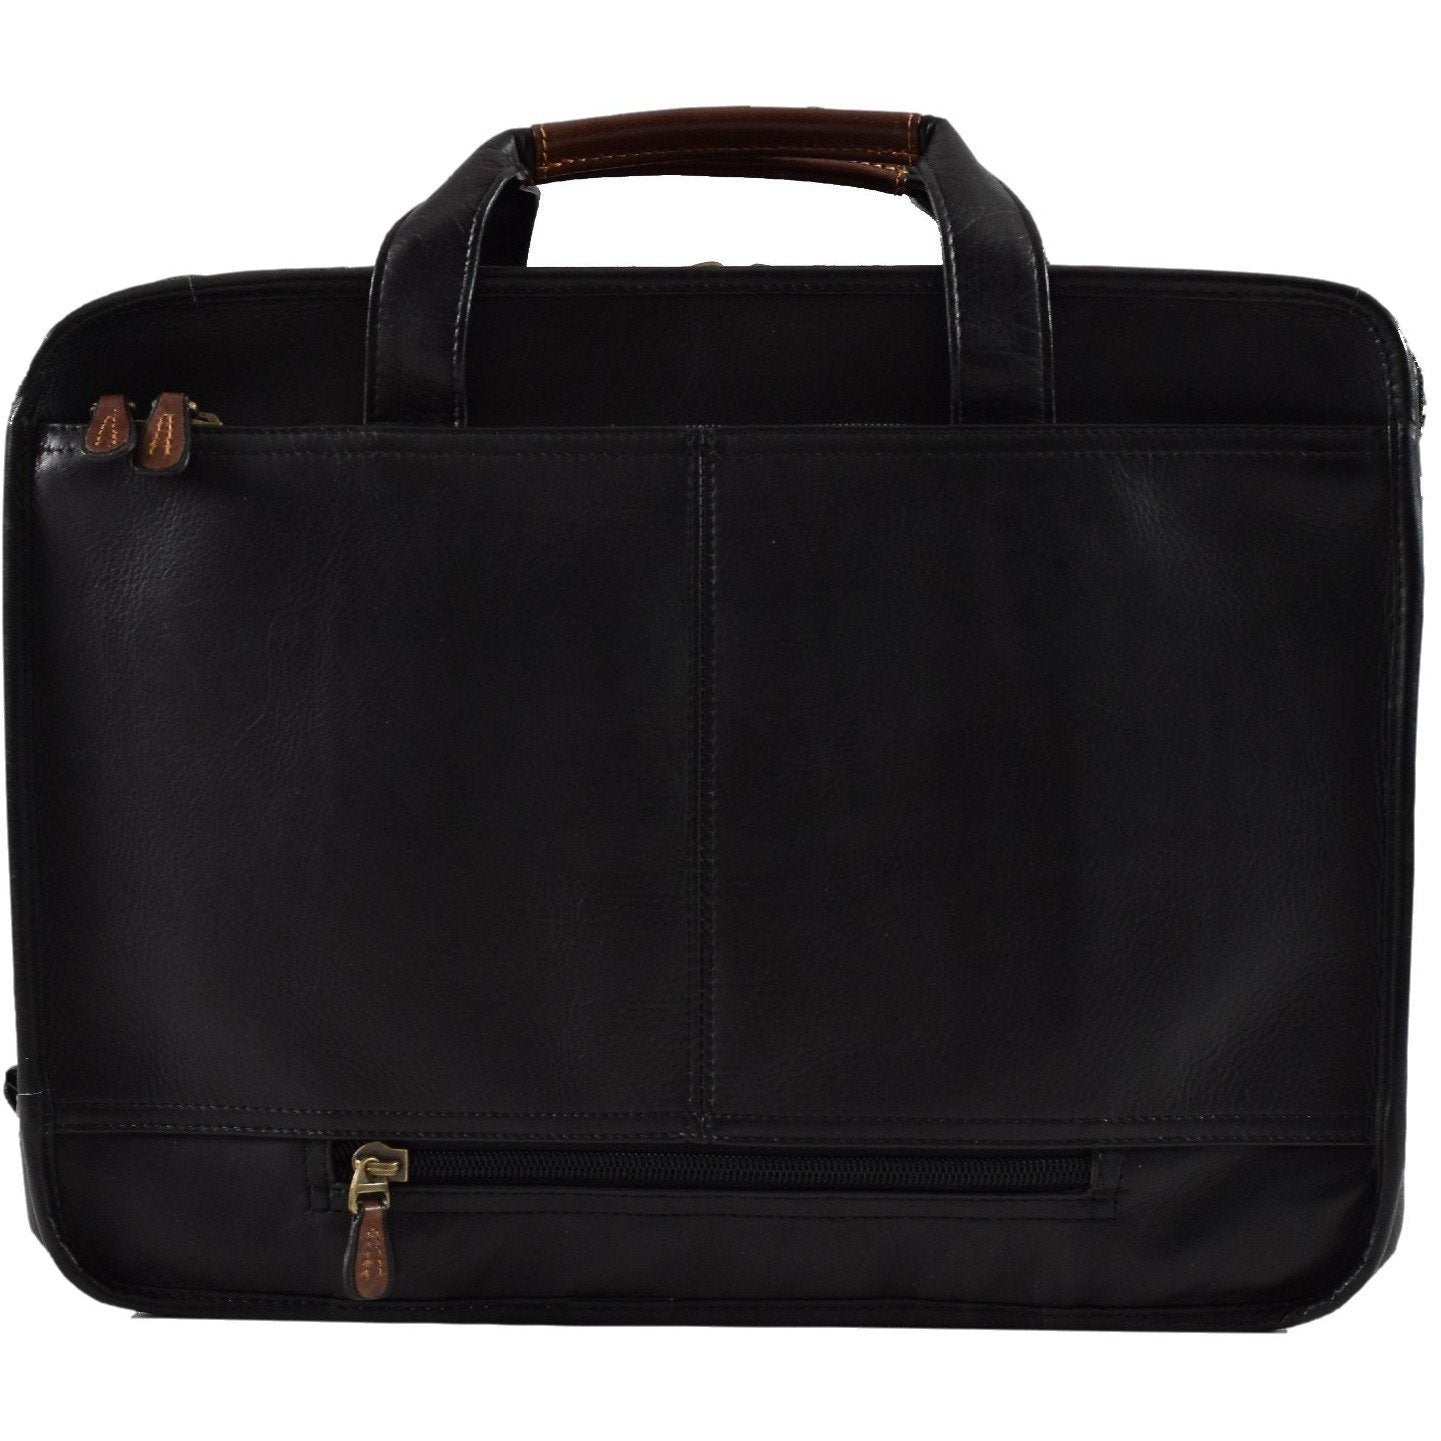 Santa Fe Traveler Briefcase, Briefcase | LAND Leather